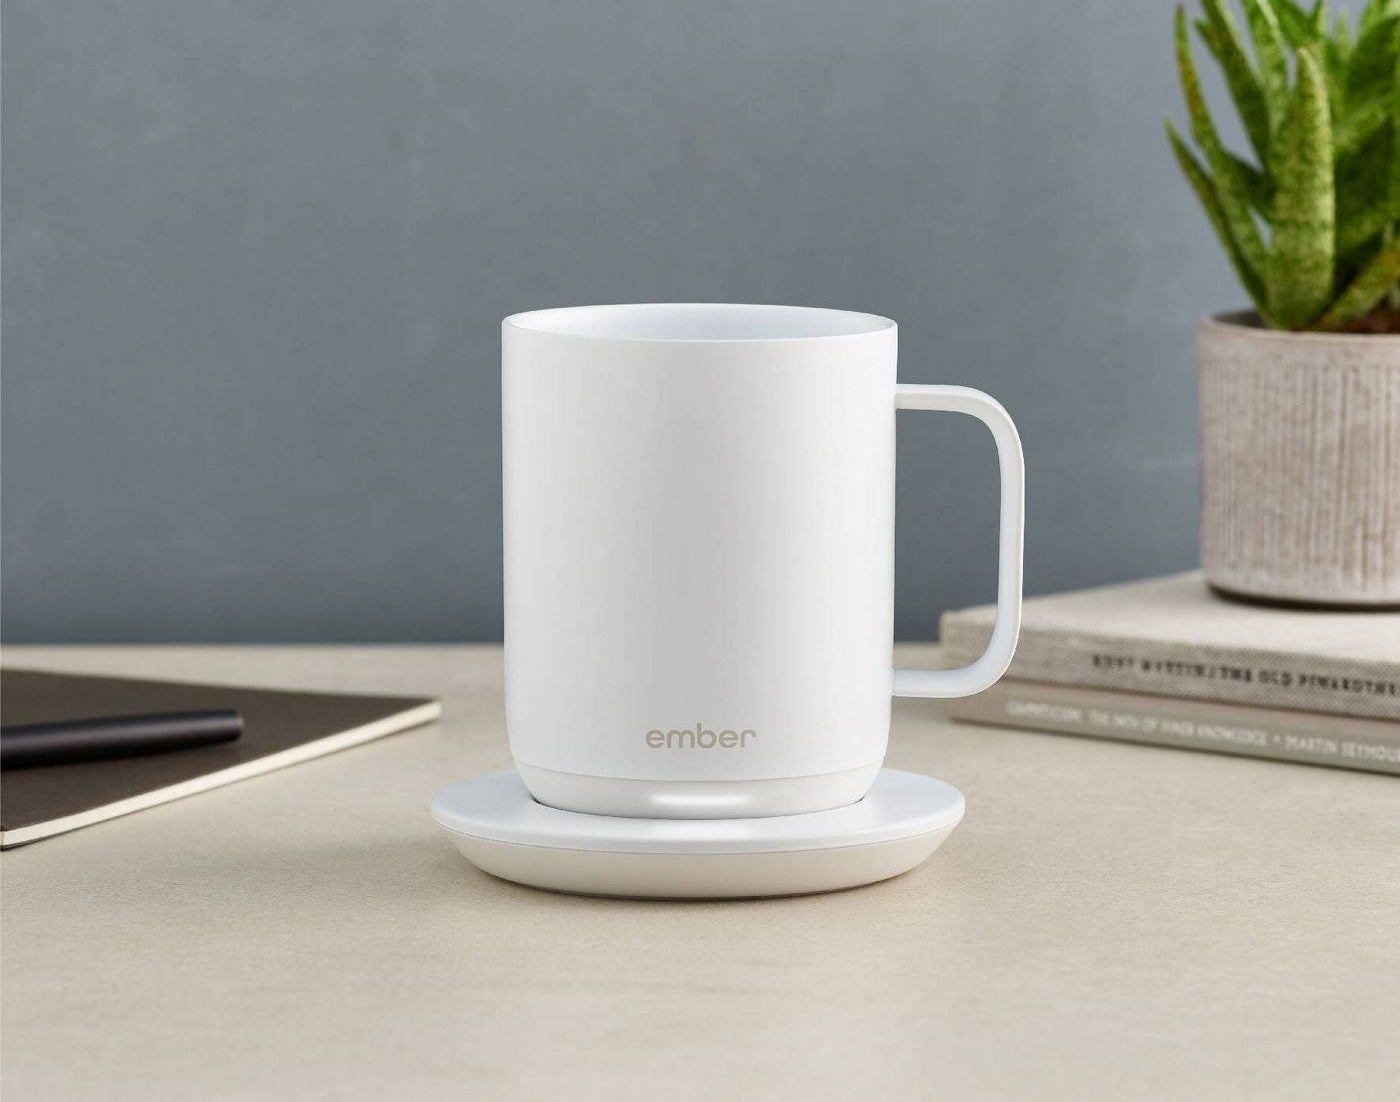 The white temperature controlled smart mug